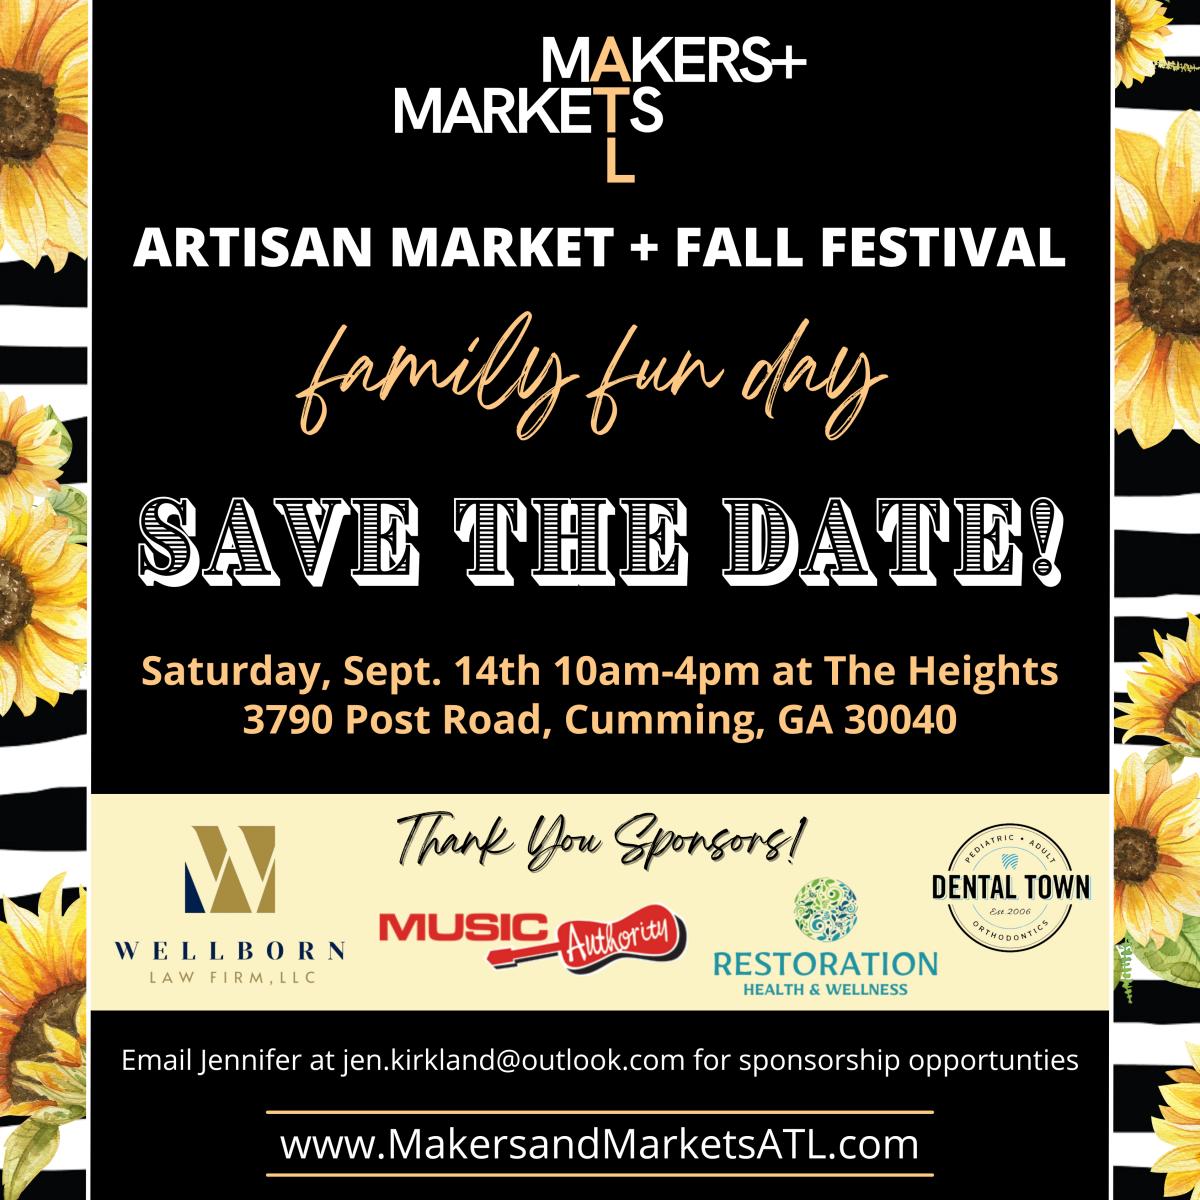 Artisan Market and Fall Festival by MMATL